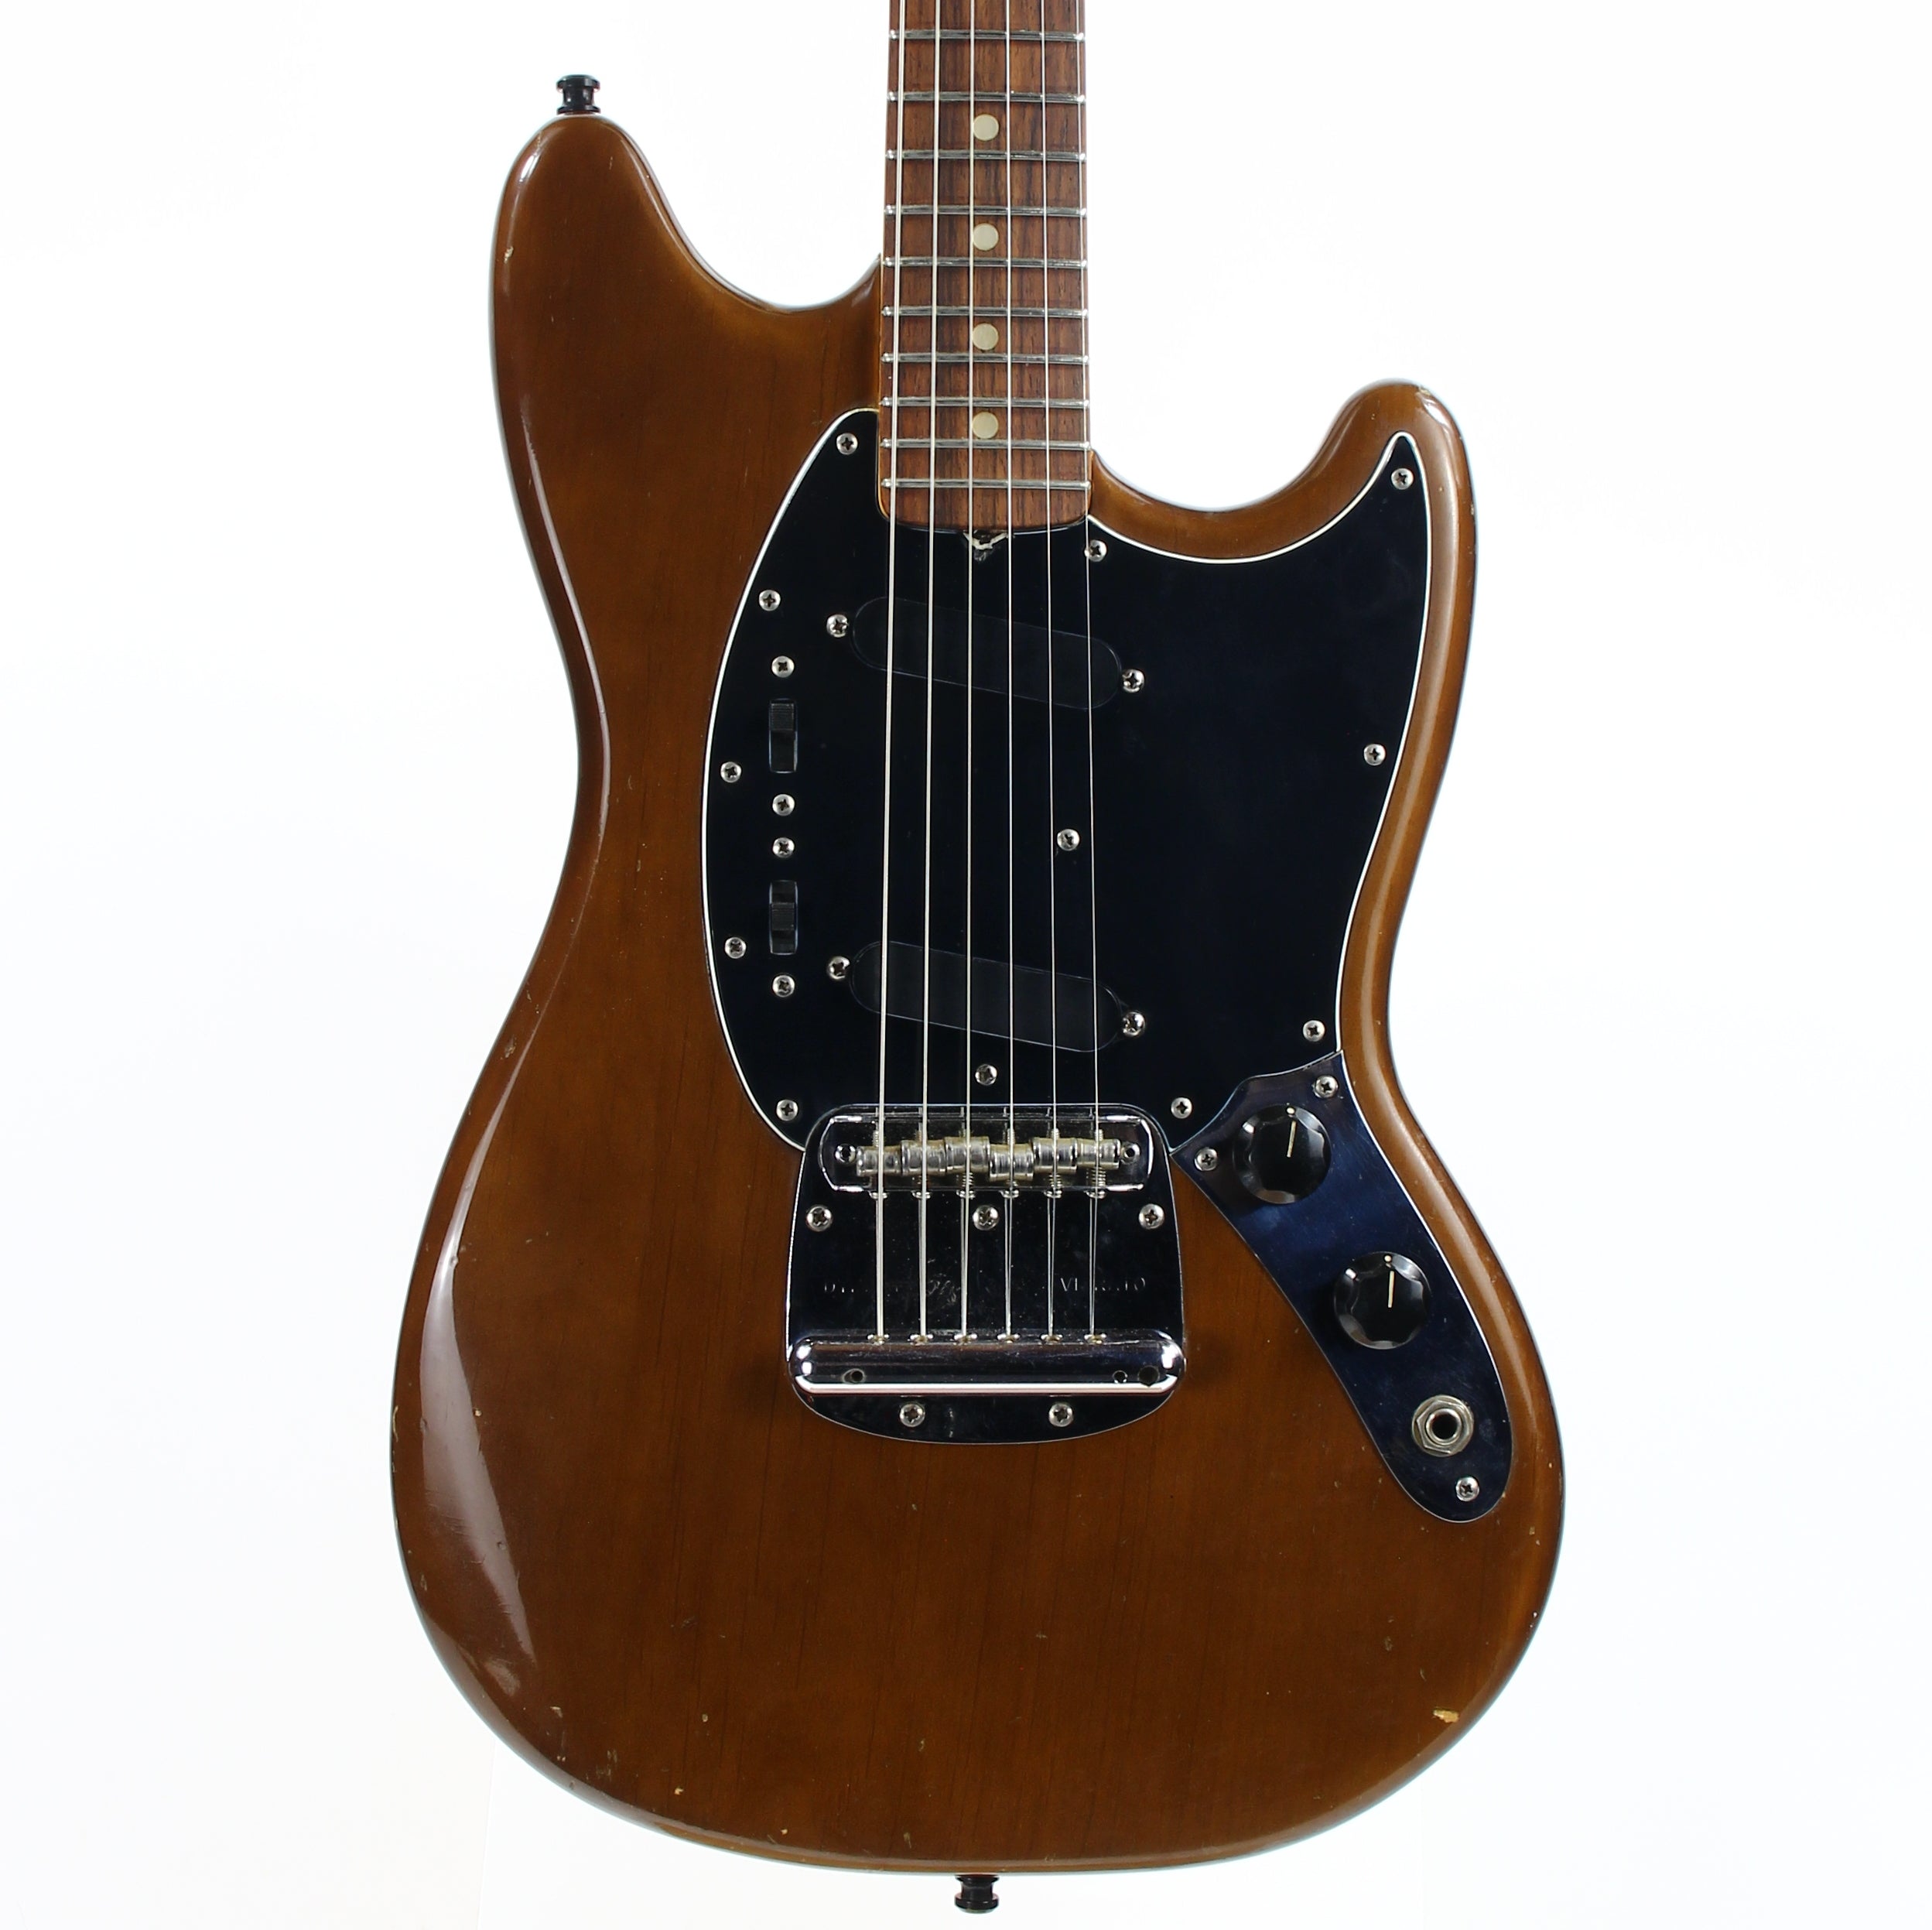 *SOLD*  1975 Fender Mustang Walnut Mocha Brown w/ Original Case - Offset Body, Kurt Cobain-type!